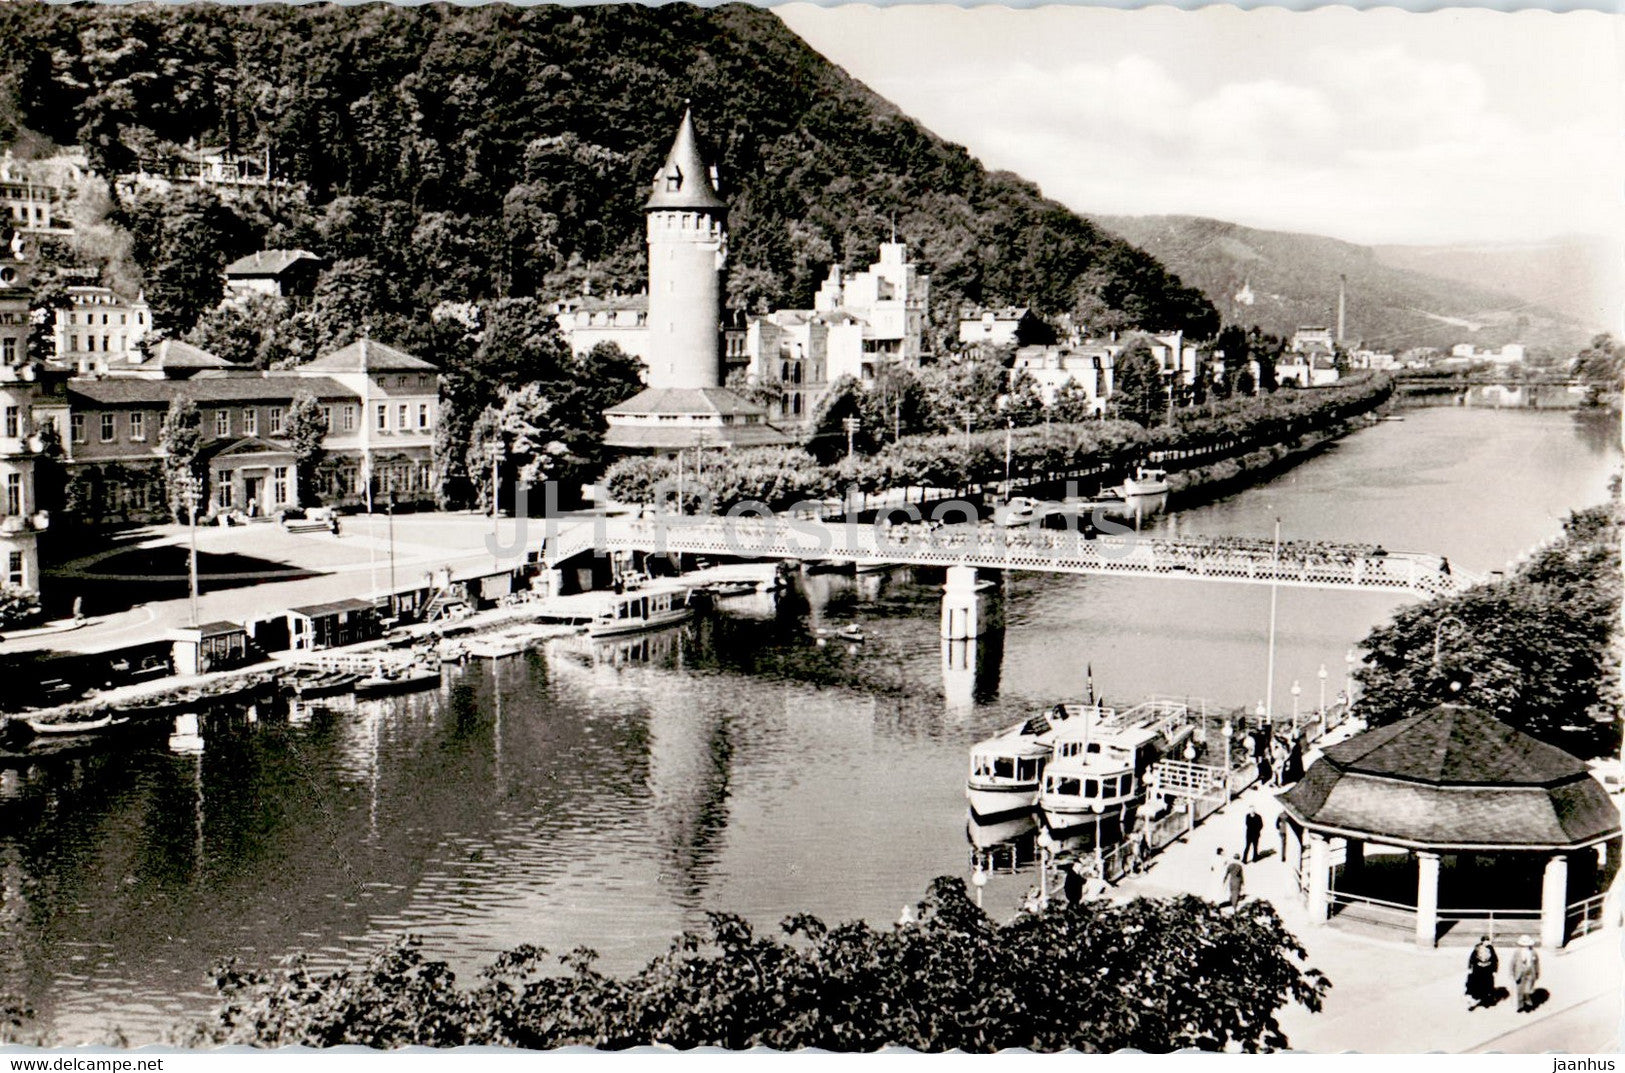 Bad Ems - Ausblick vom Hotel zum Lowen - bridge - old postcard - 1954 - Germany - used - JH Postcards